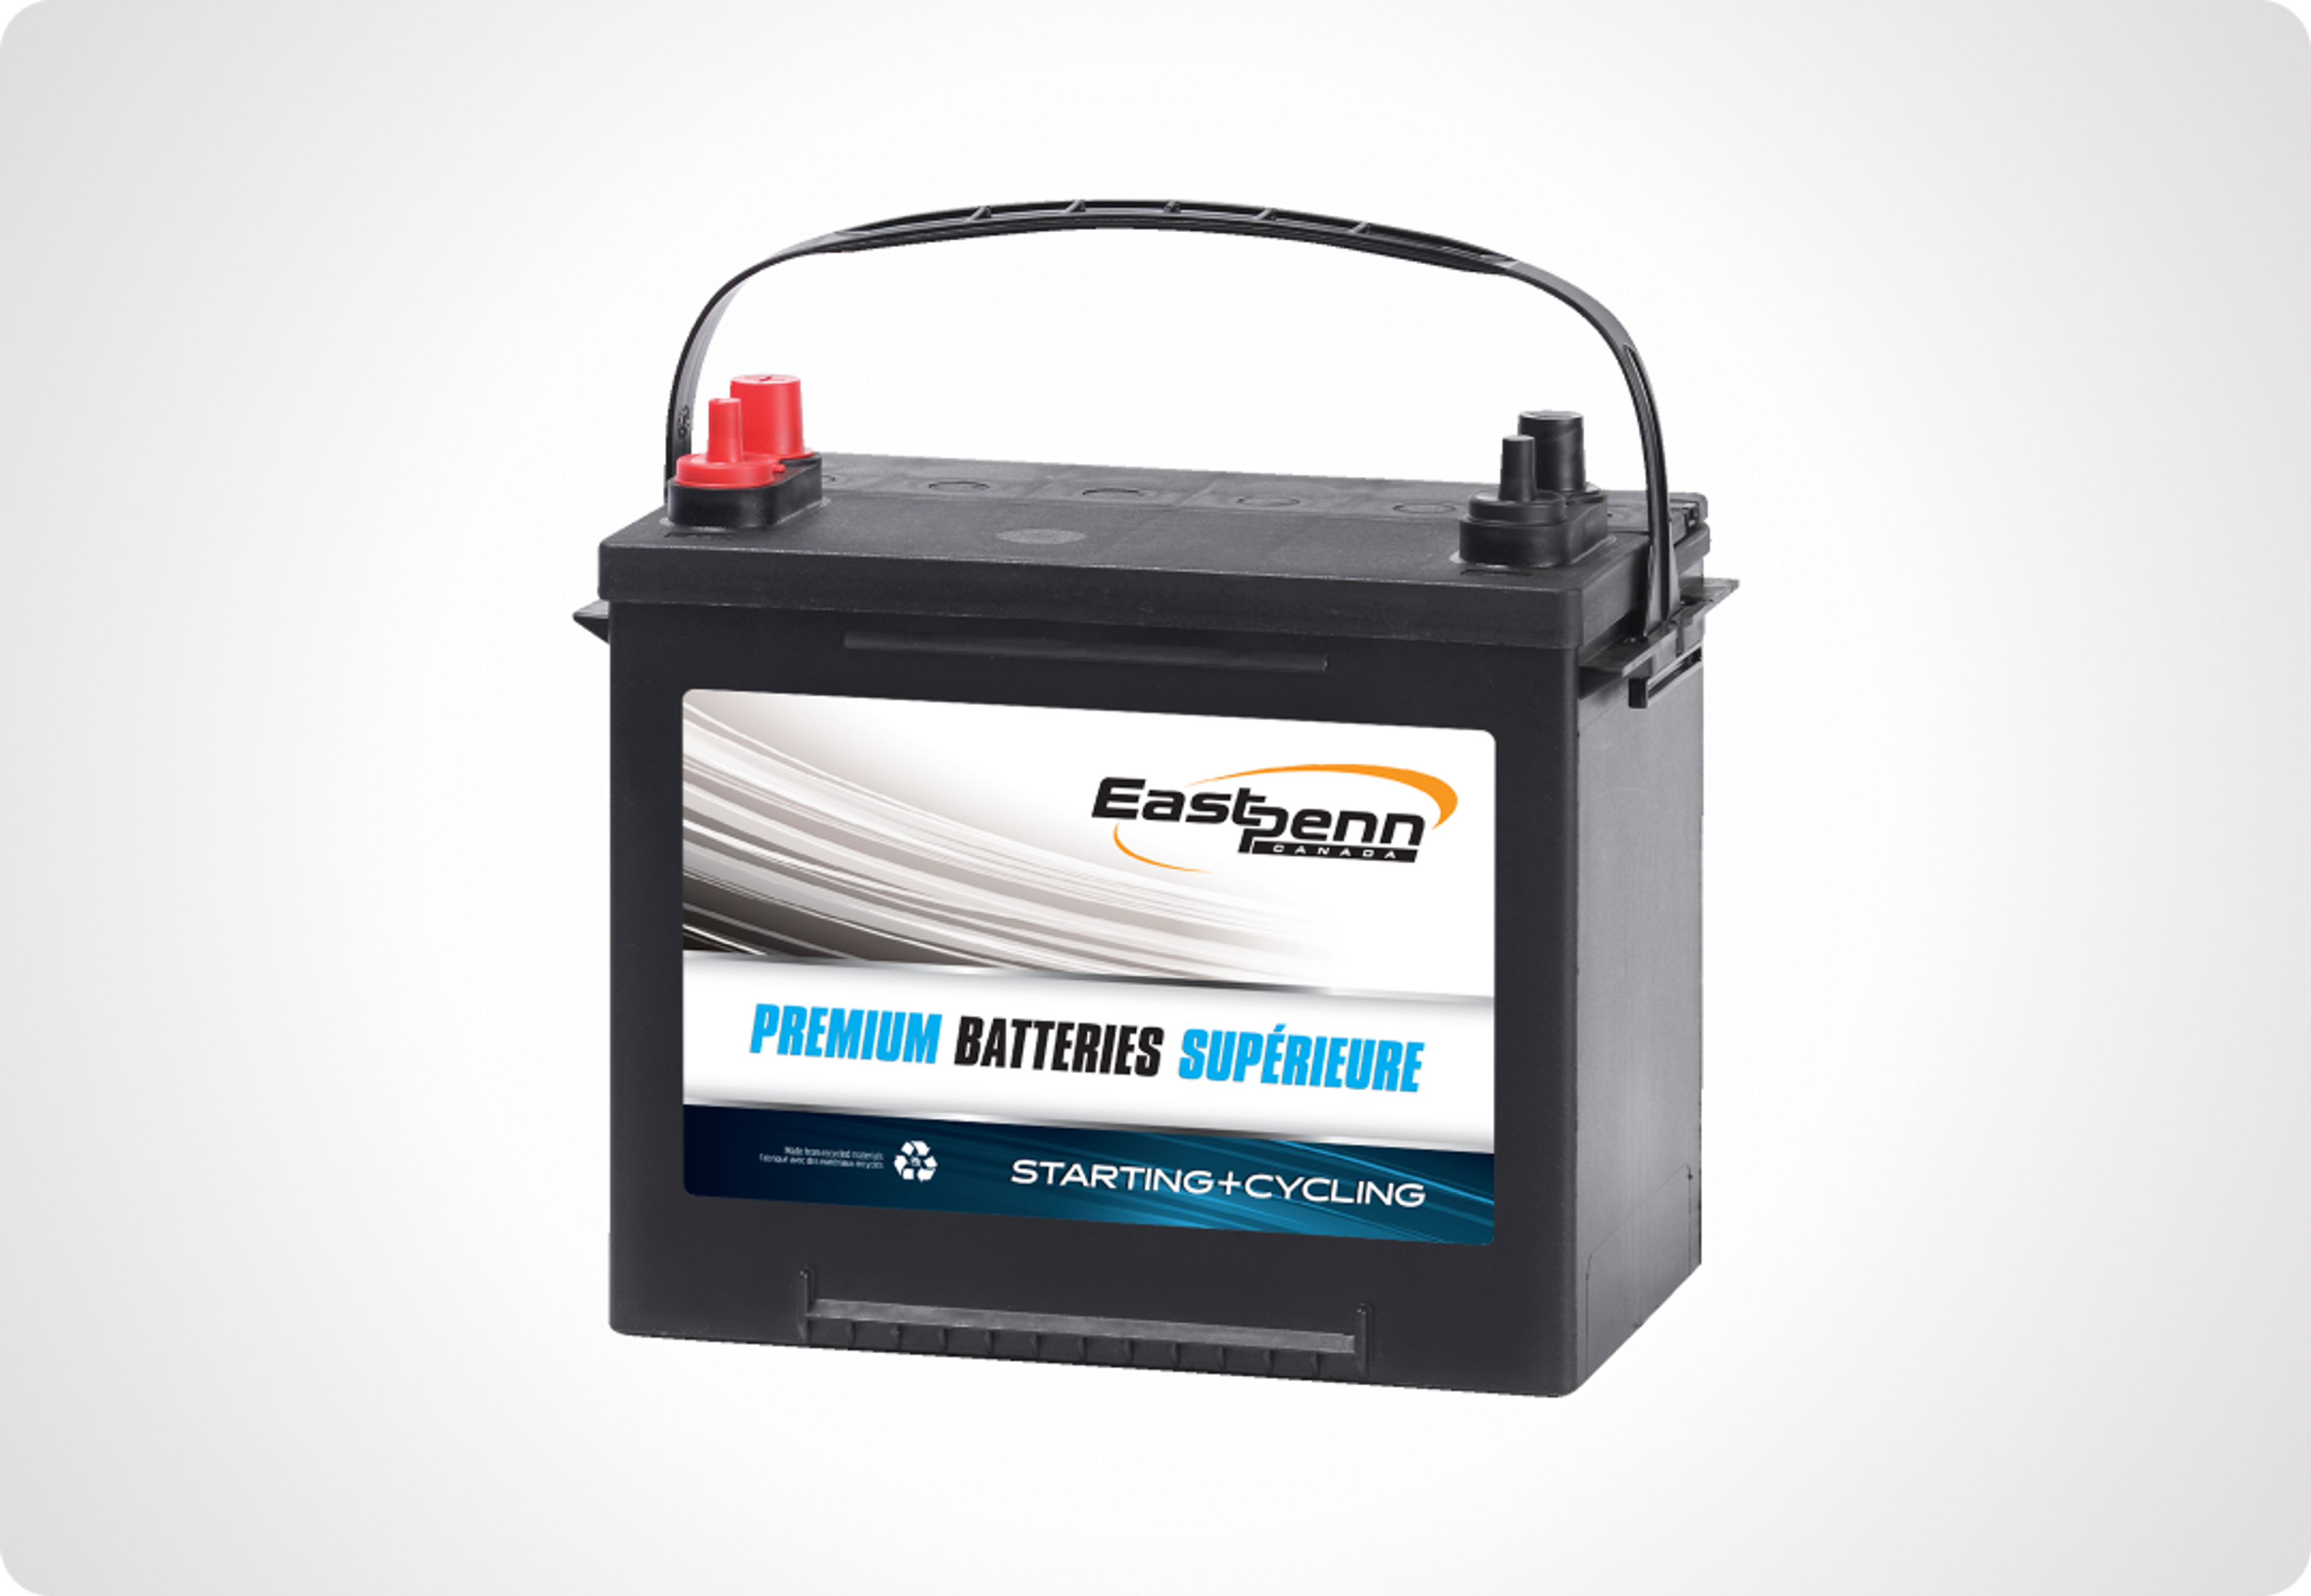 Picture of single East Penn brand premium car dual purpose batteries